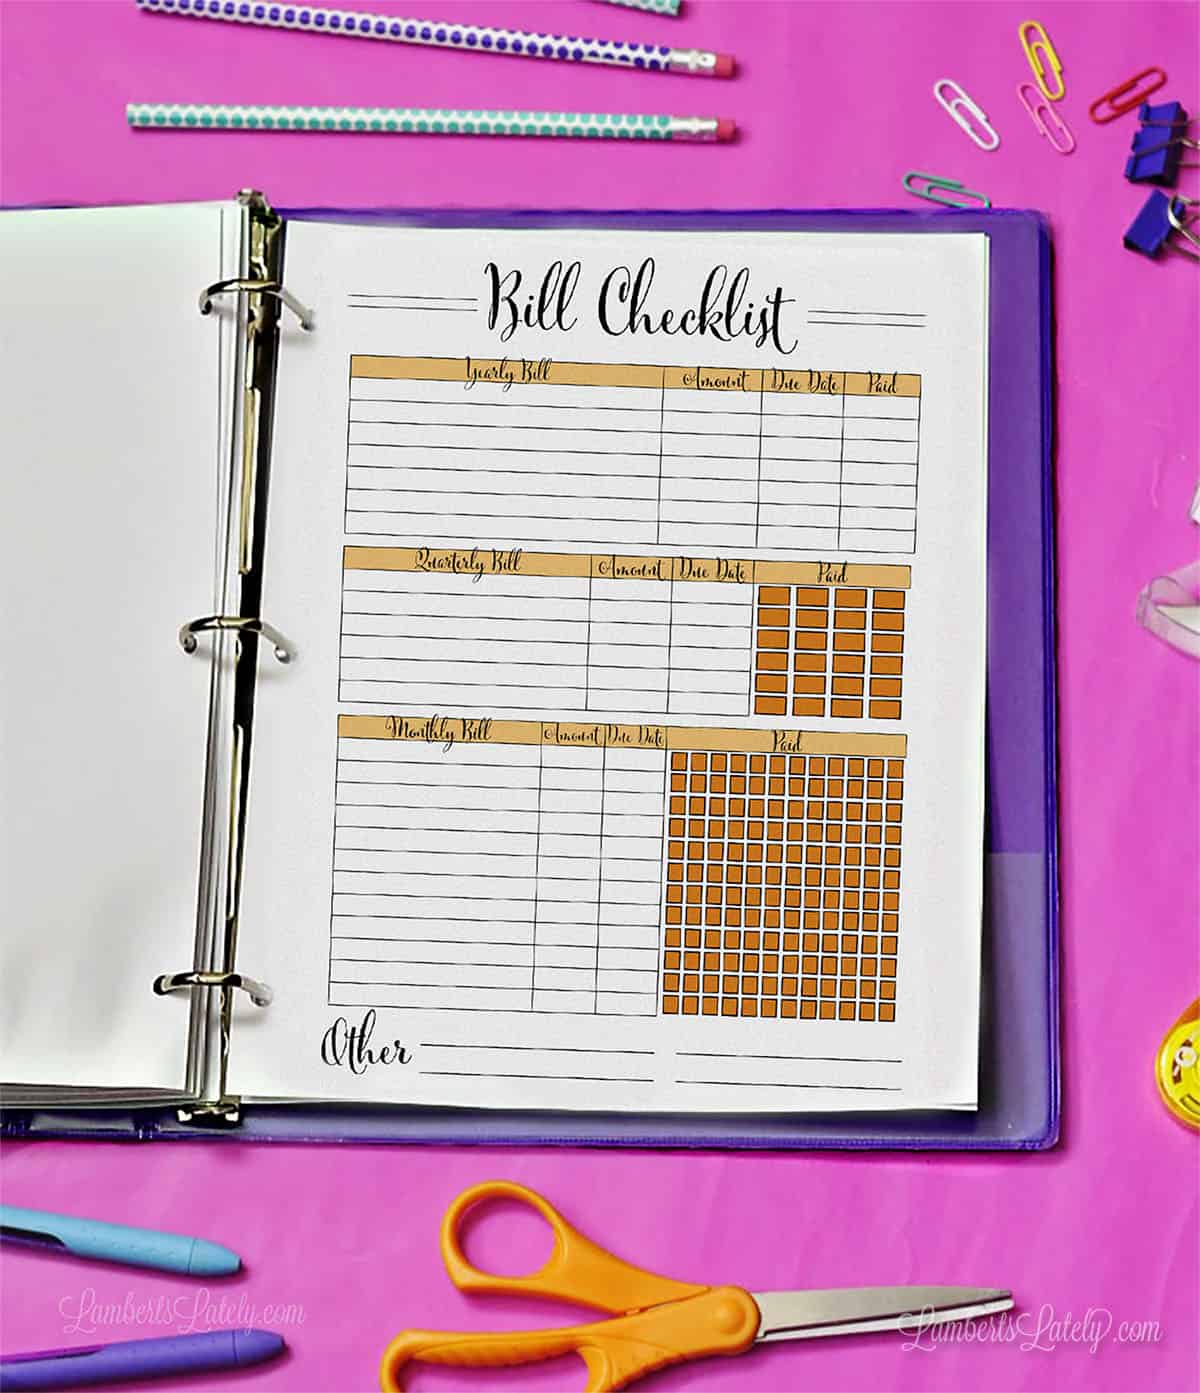 bill checklist printable in a notebook.